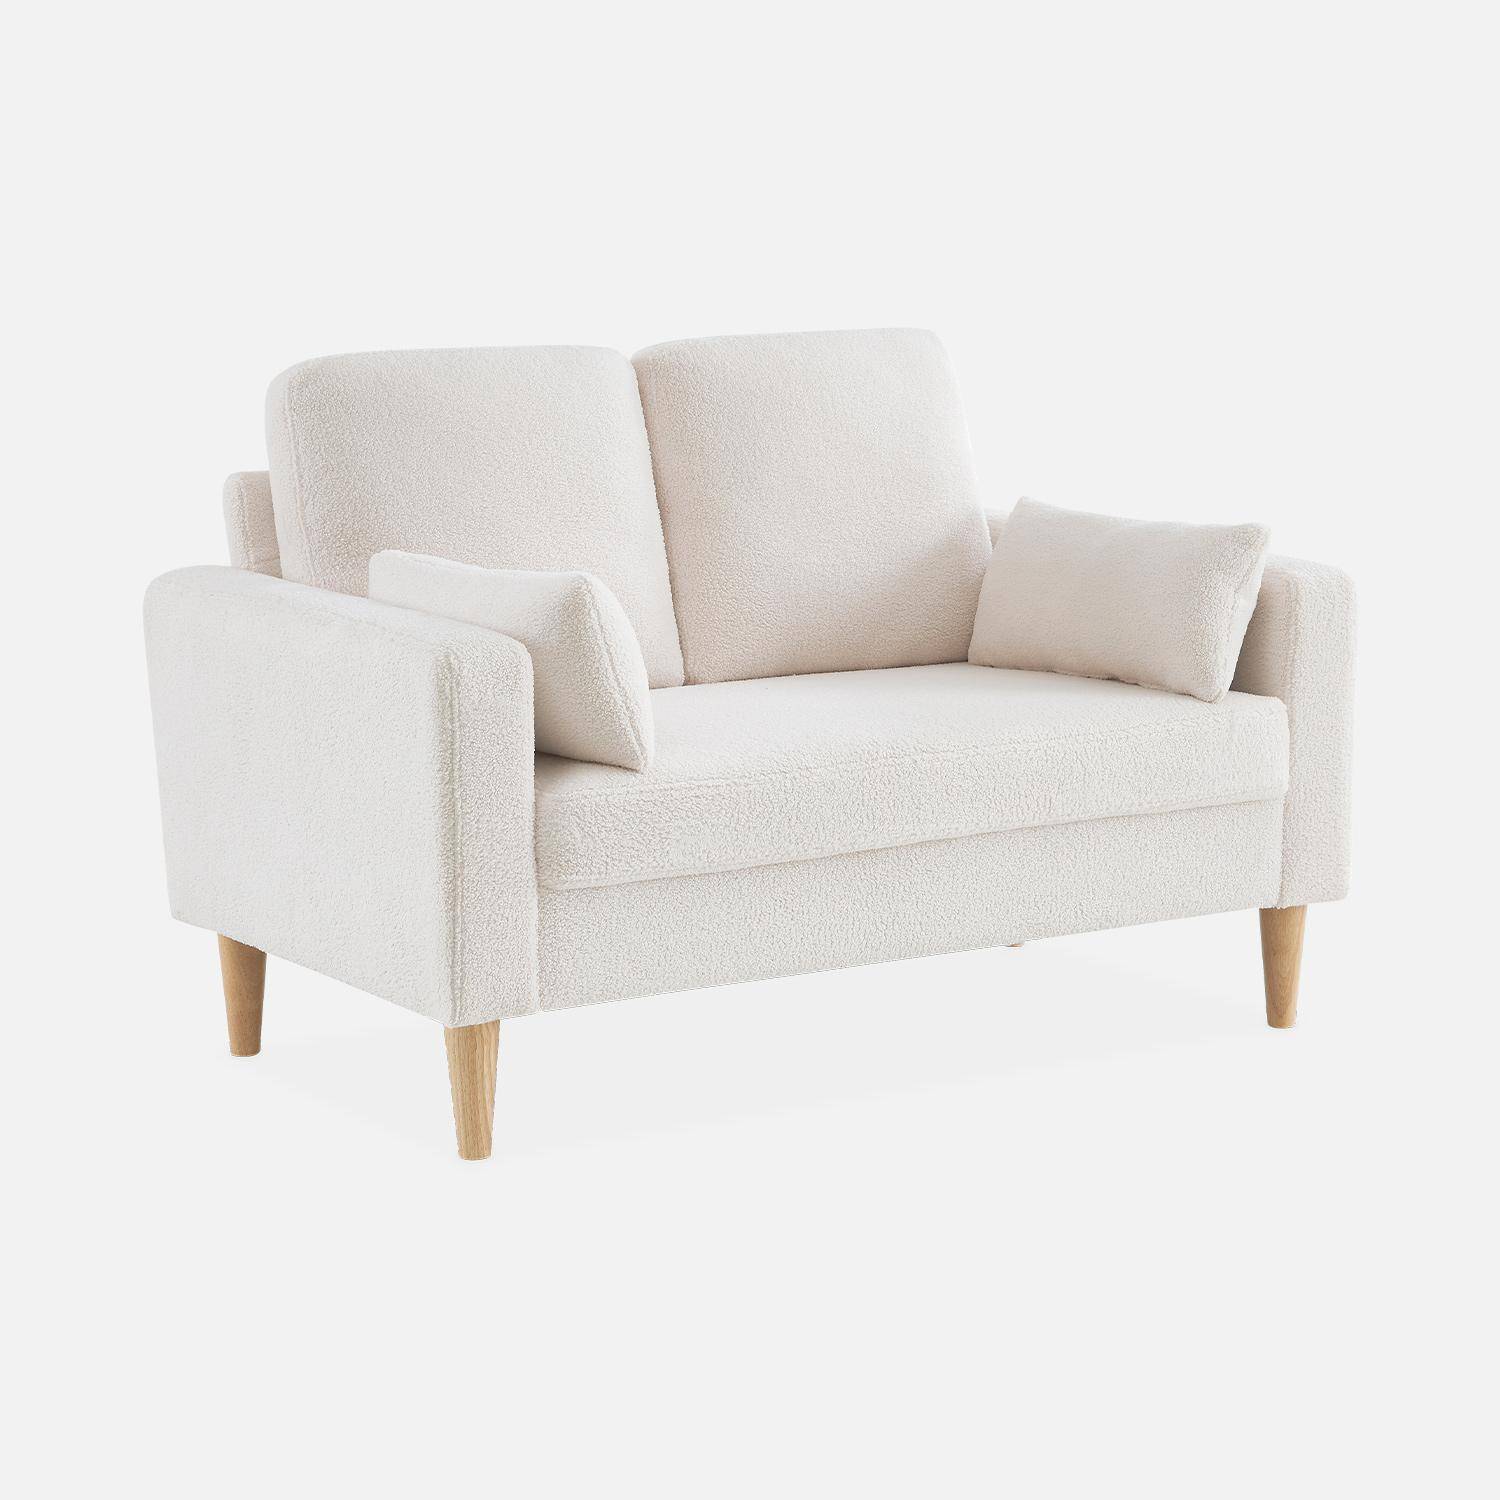 Sofá con rizos blancos, sofá recto de 2 plazas con patas de madera, estilo escandinavo   Photo3